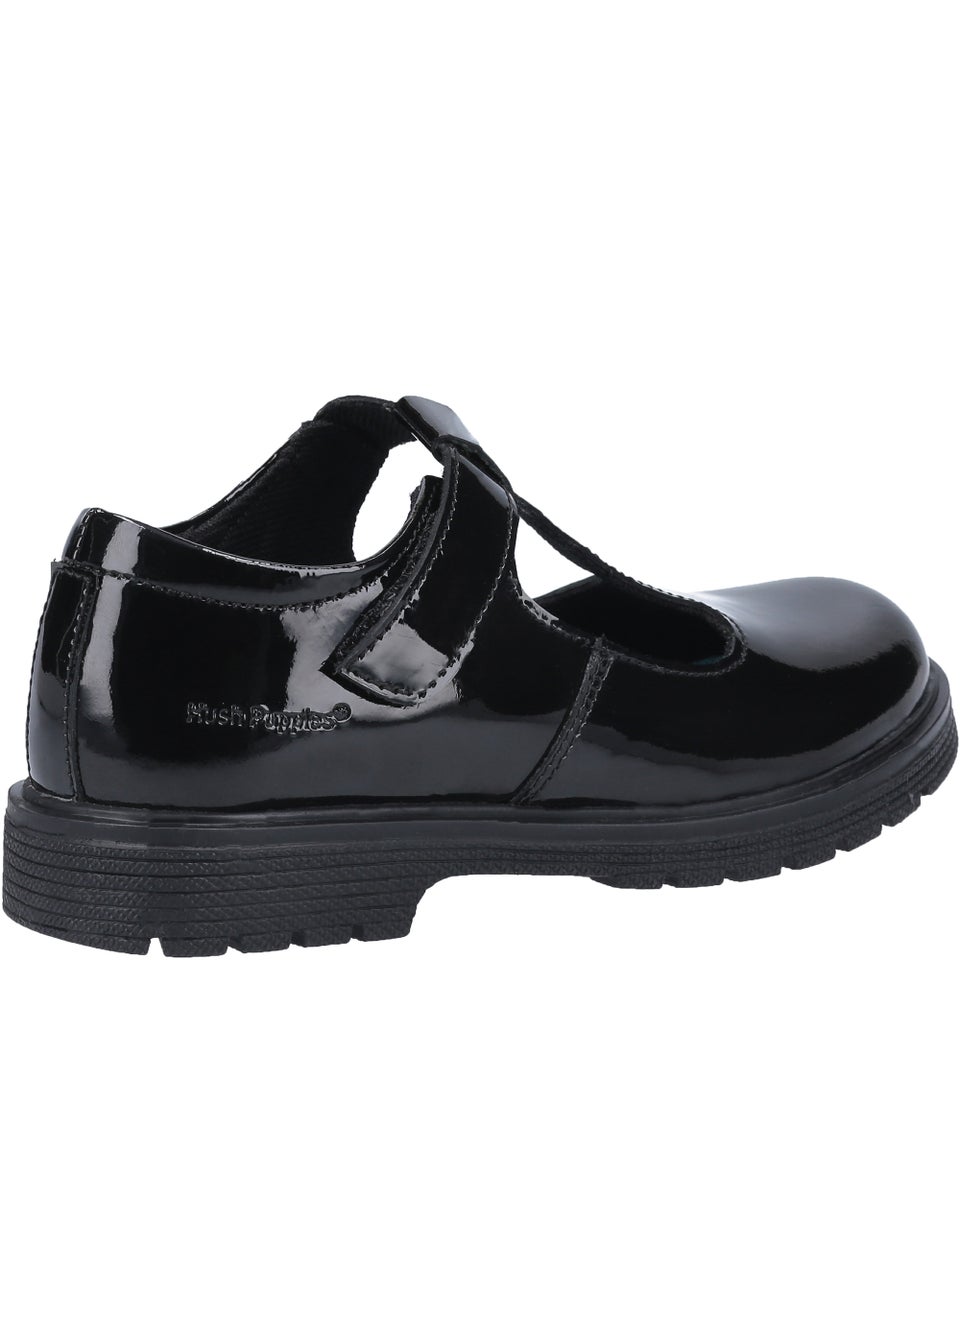 Girls Hush Puppies Gracie Junior Black School Shoes (Younger 10-Older 2)